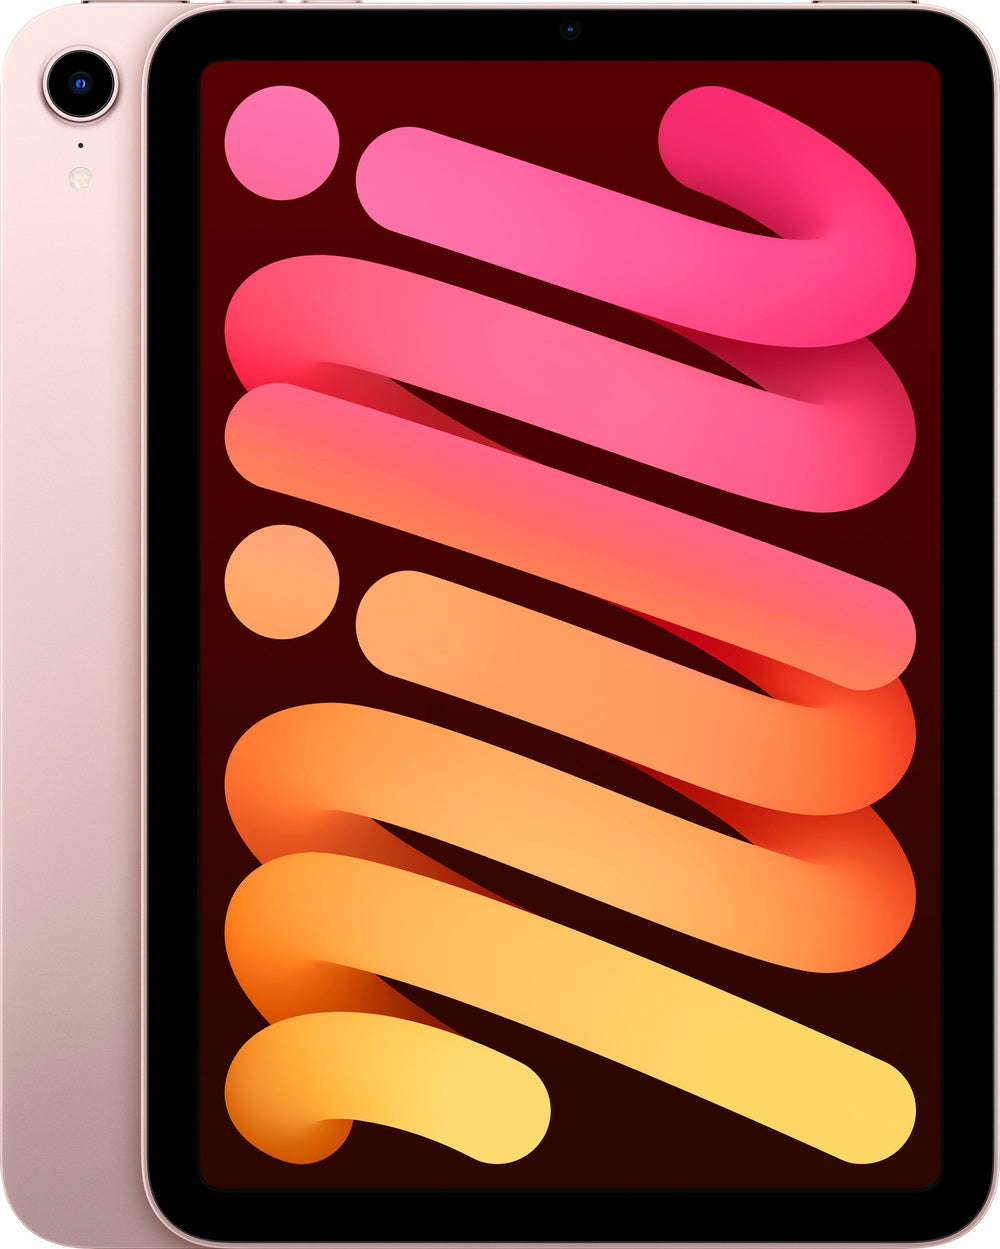 Apple - iPad mini (Latest Model) with Wi-Fi - 64GB - Pink_1